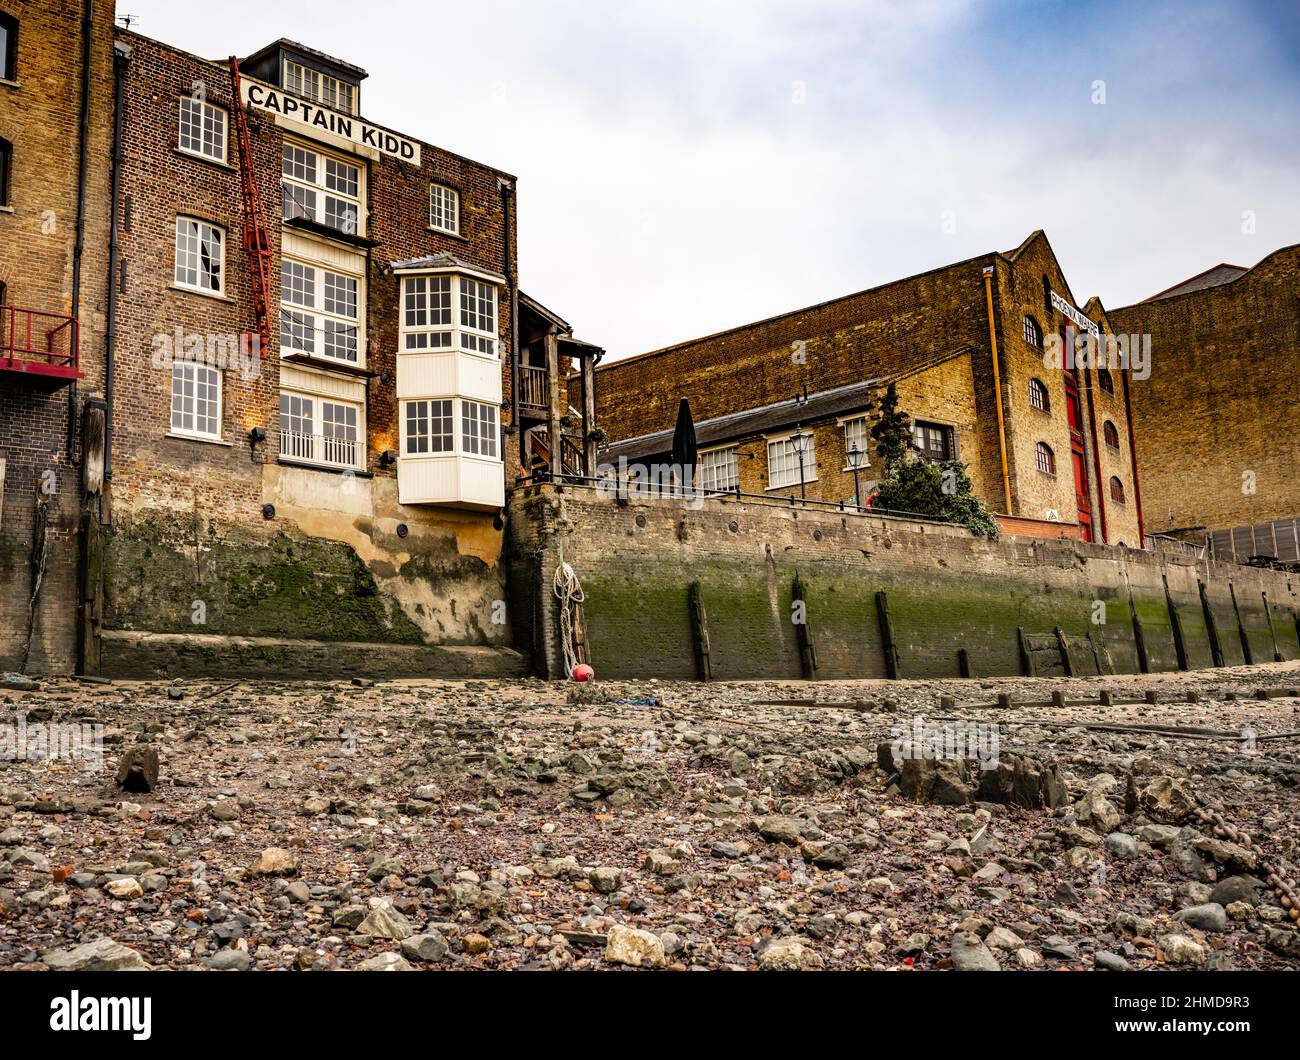 Captain Kidd Inn, Pheonix Wharf, Thames low water. Wapping. Stock Photo